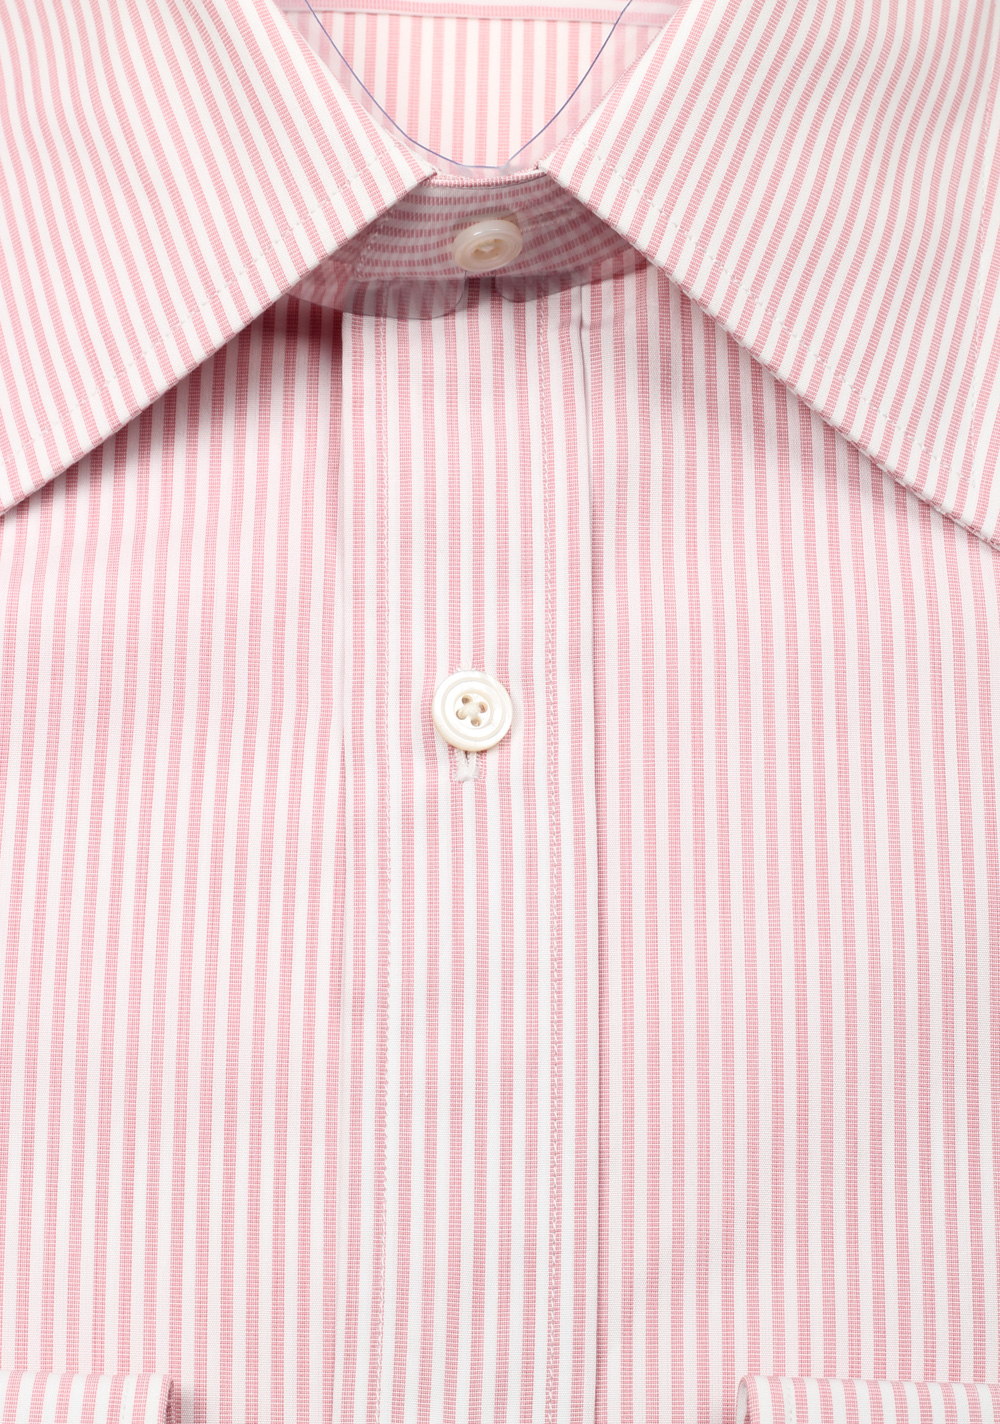 TOM FORD Striped White Pink Dress Shirt Size 40 / 15,75 U.S. | Costume Limité